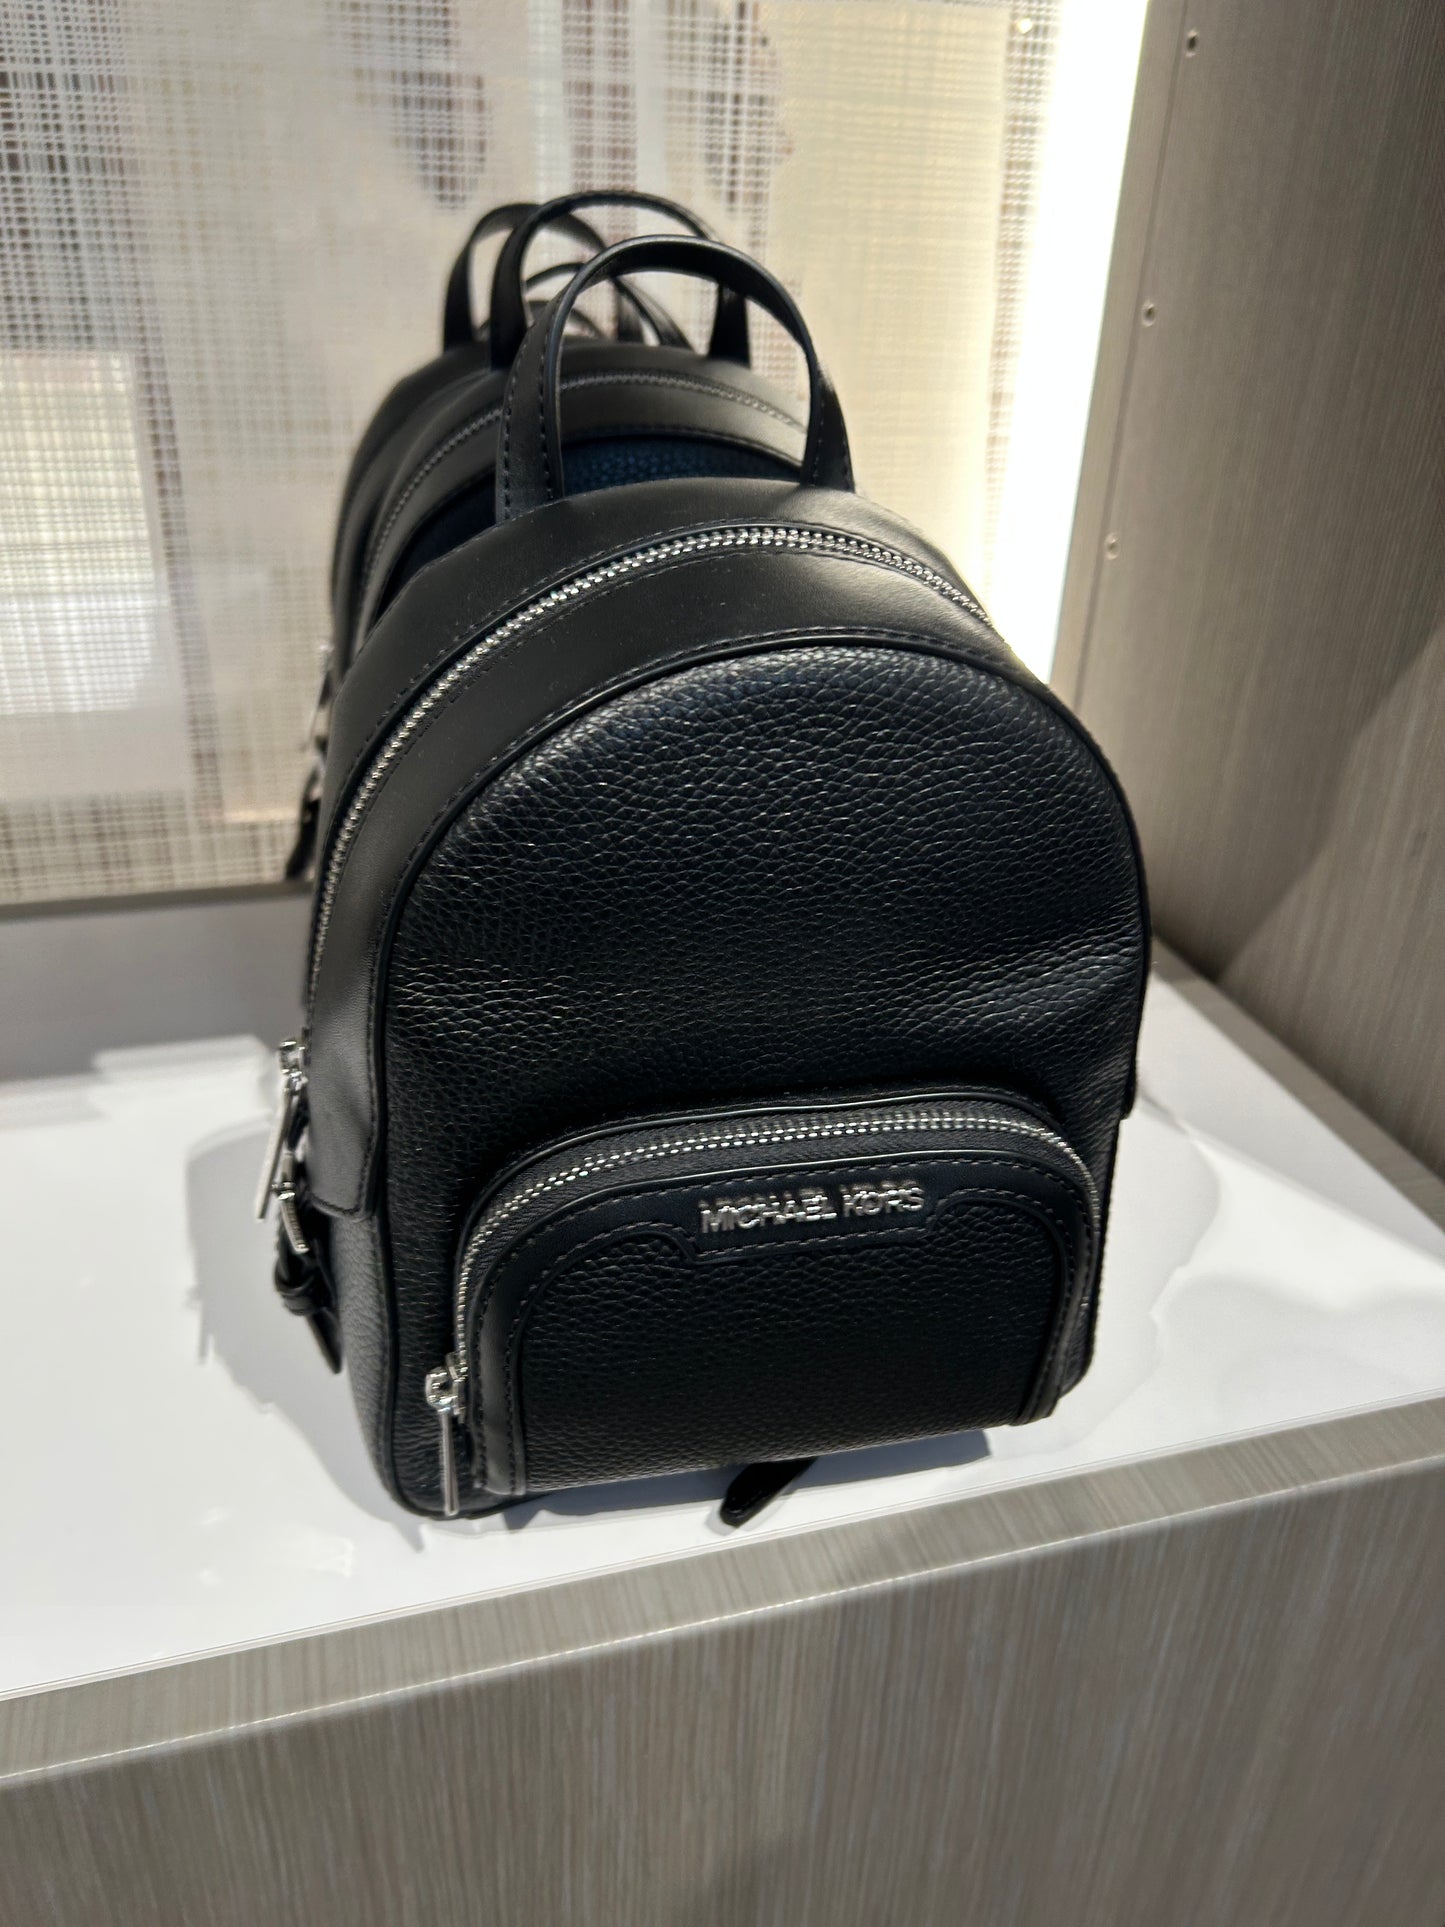 Load image into Gallery viewer, Michael Kors Jaycee Xs Convertible Backpack In Black (Pre-order)
